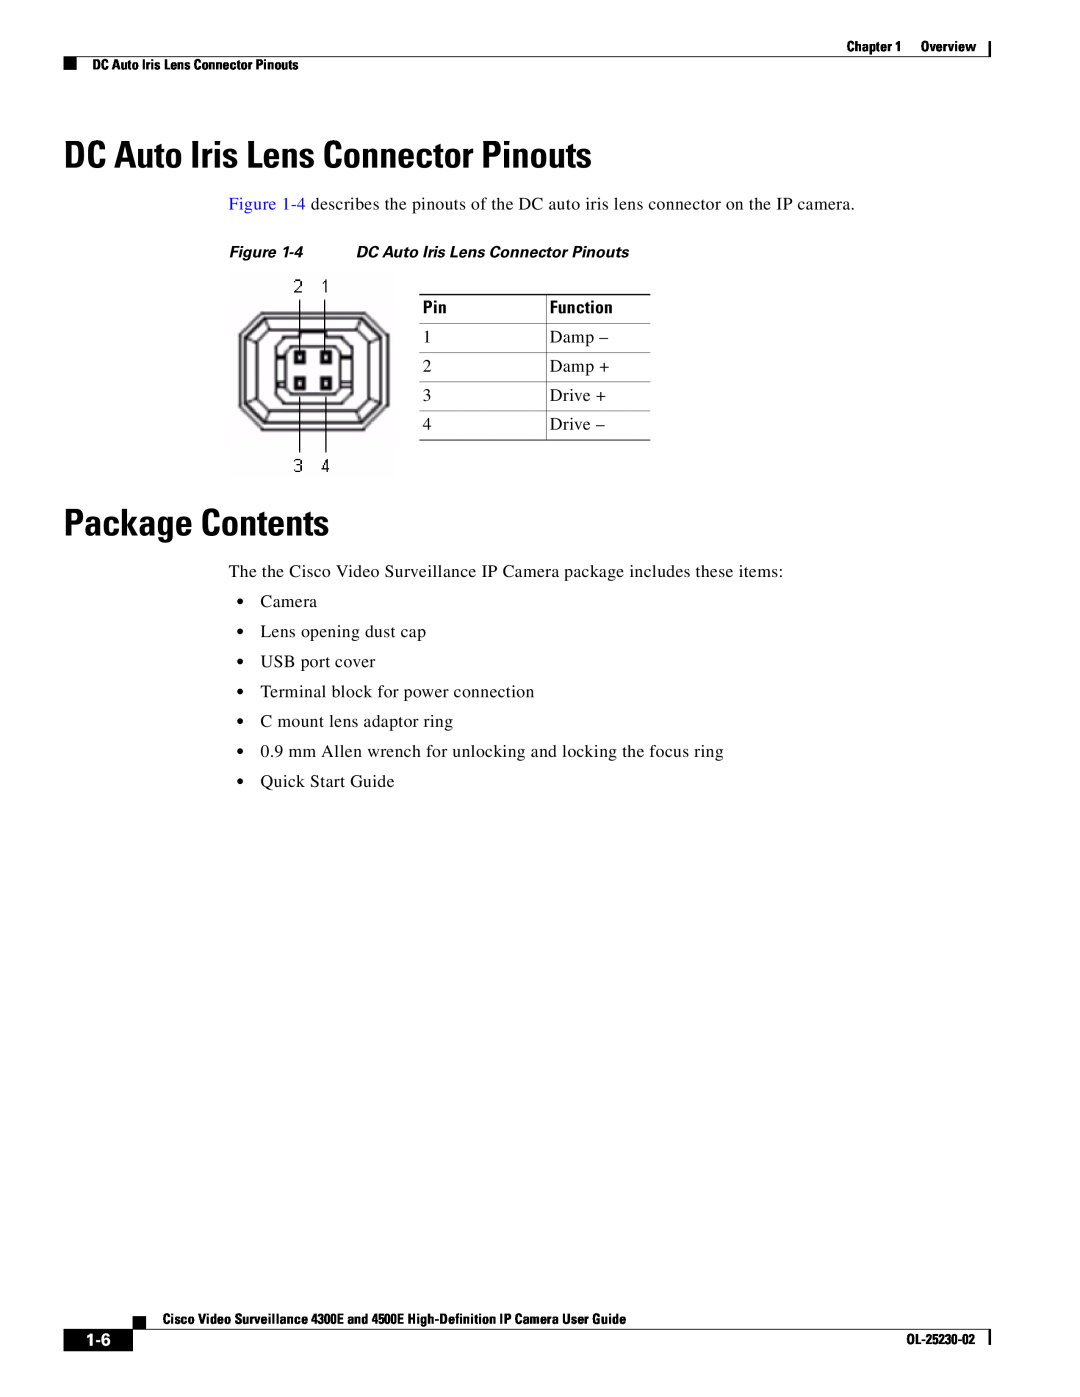 Cisco Systems 4300E, 4500E manual DC Auto Iris Lens Connector Pinouts, Package Contents, Function 